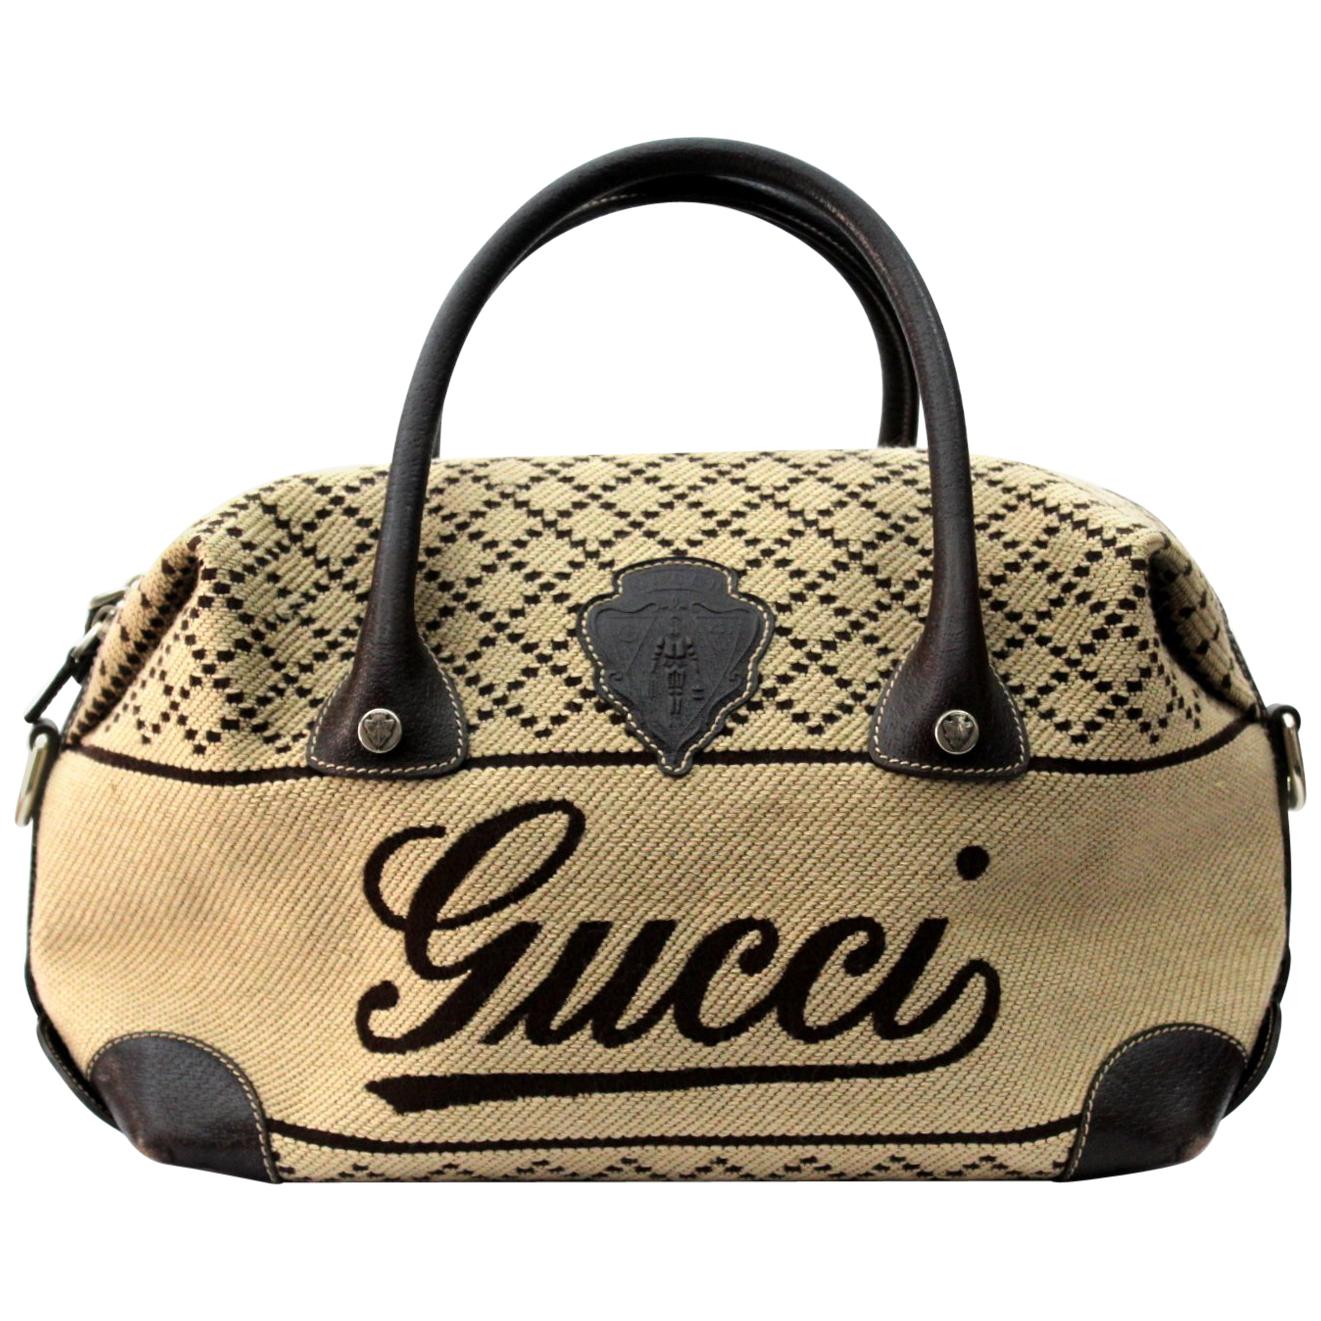 Gucci Beige Top Handle Bag